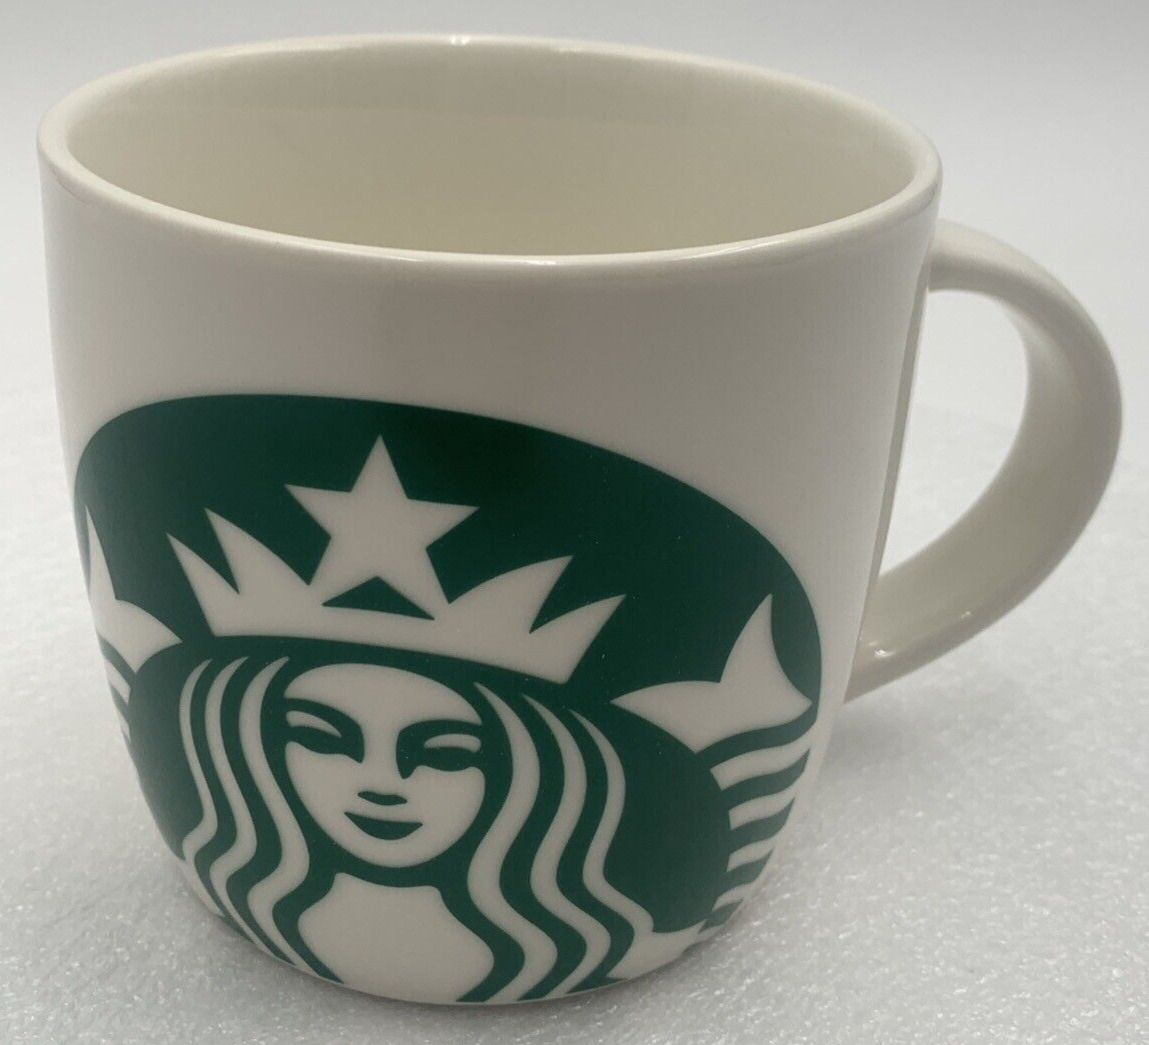 2017 Starbucks Coffee Mug Cup Large Green Mermaid Siren Logo 14oz